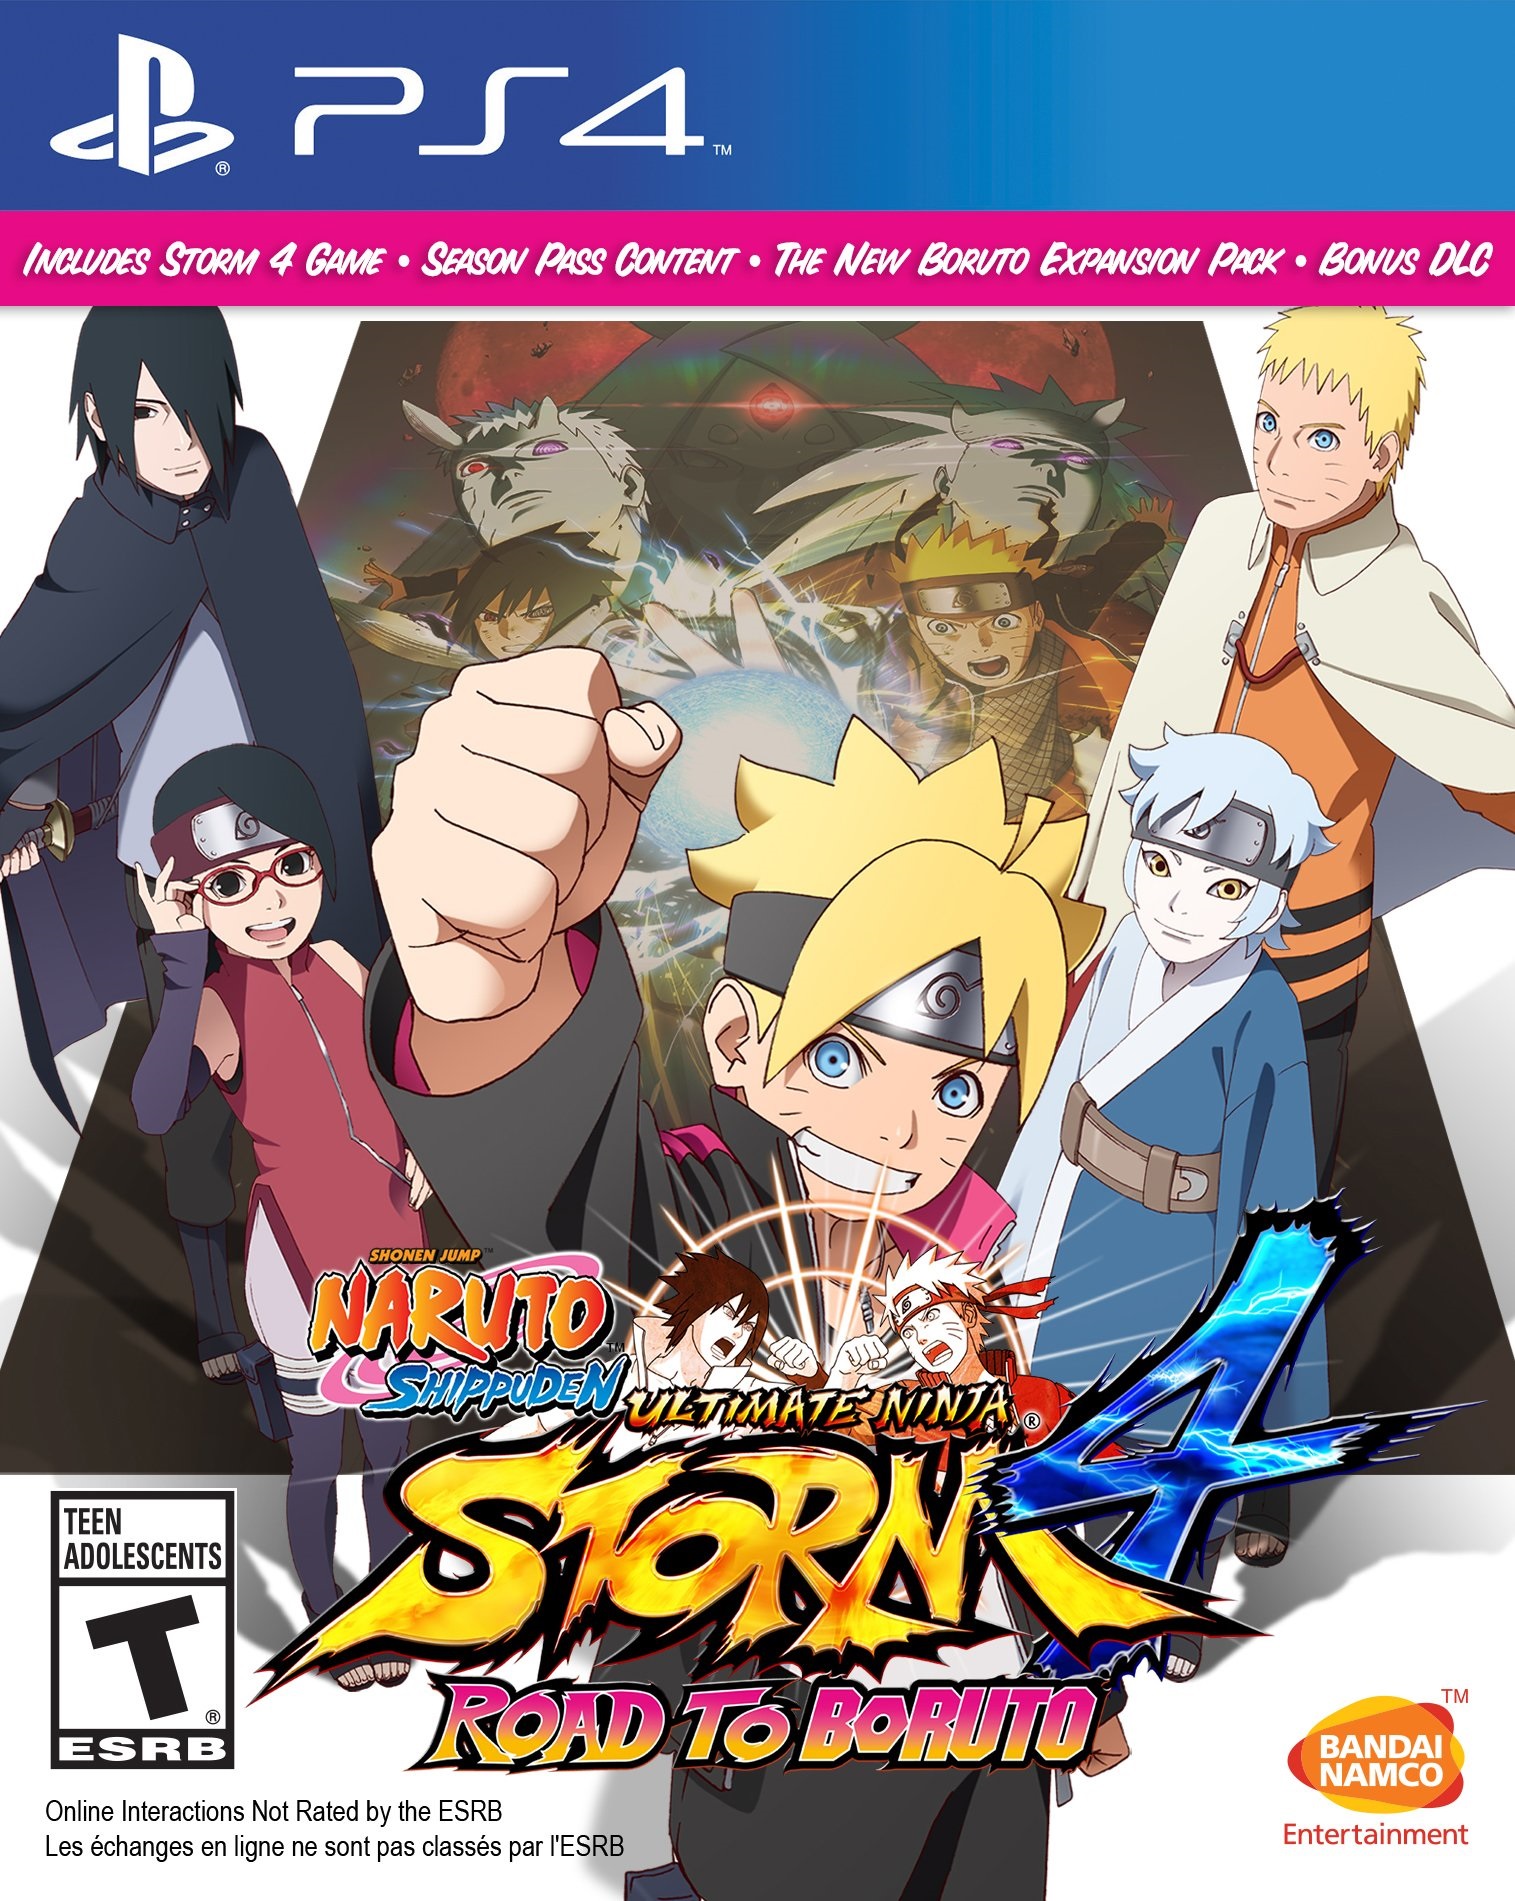 Naruto Shippuden: Ultimate Ninja Storm 4 Road to Boruto Gets Retail Version